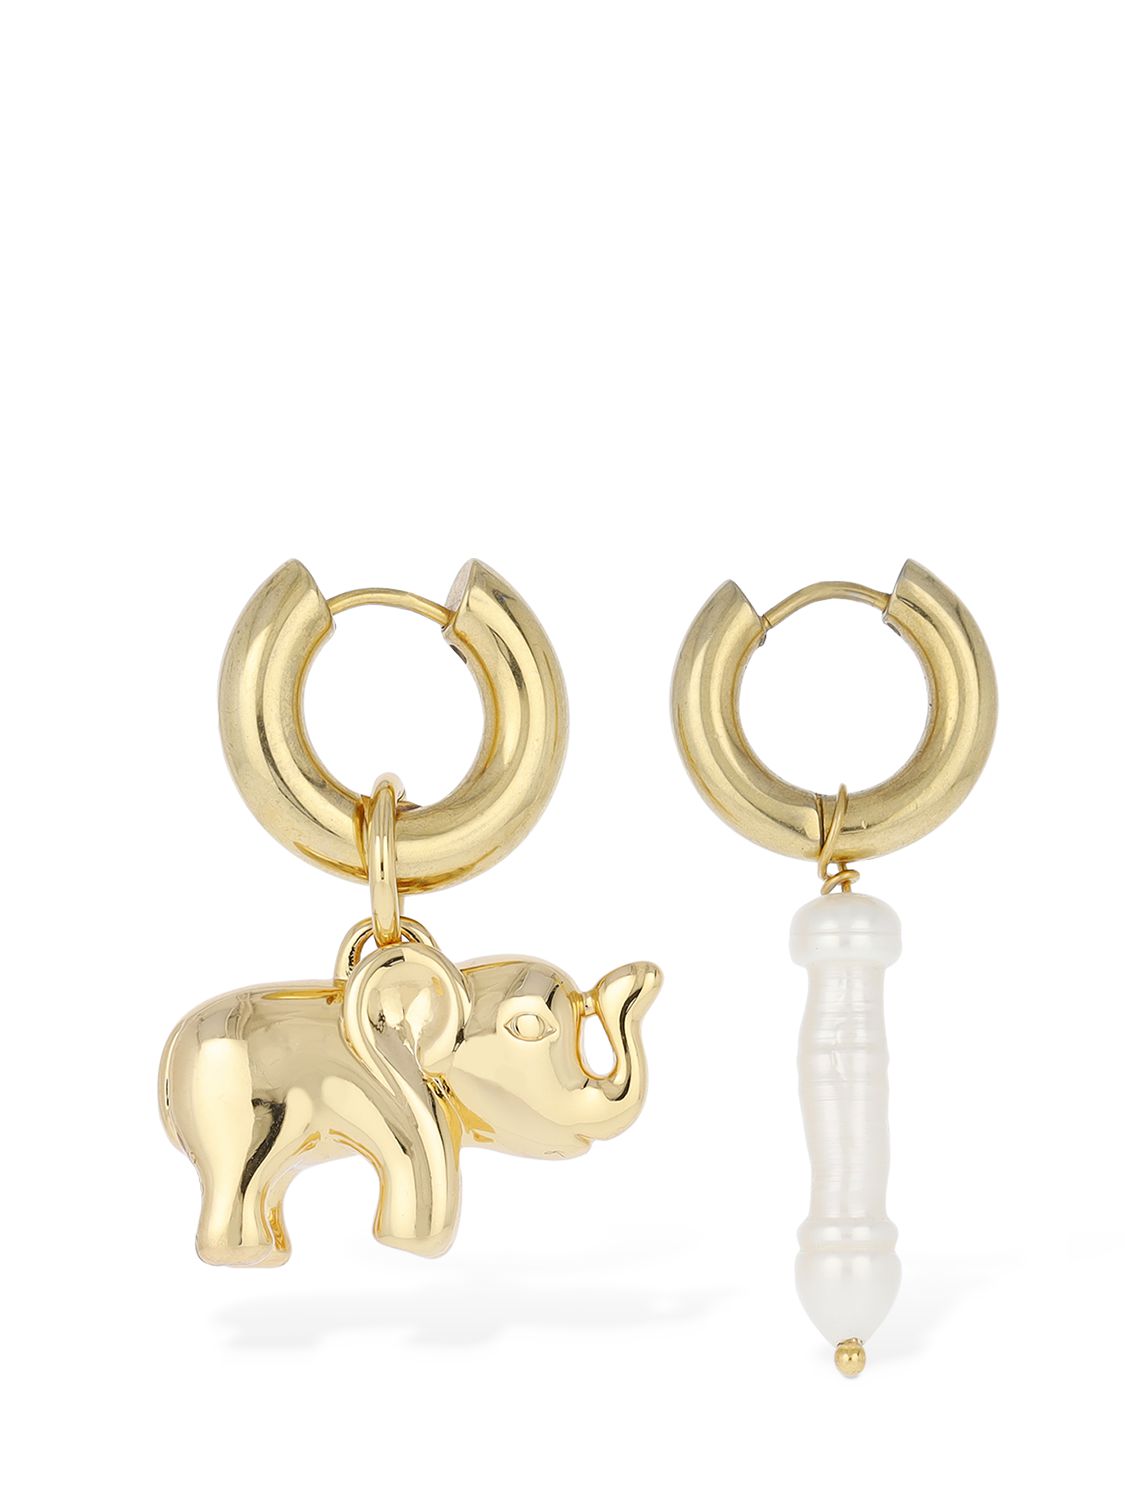 Elephant & Pearl Mismatched Earrings